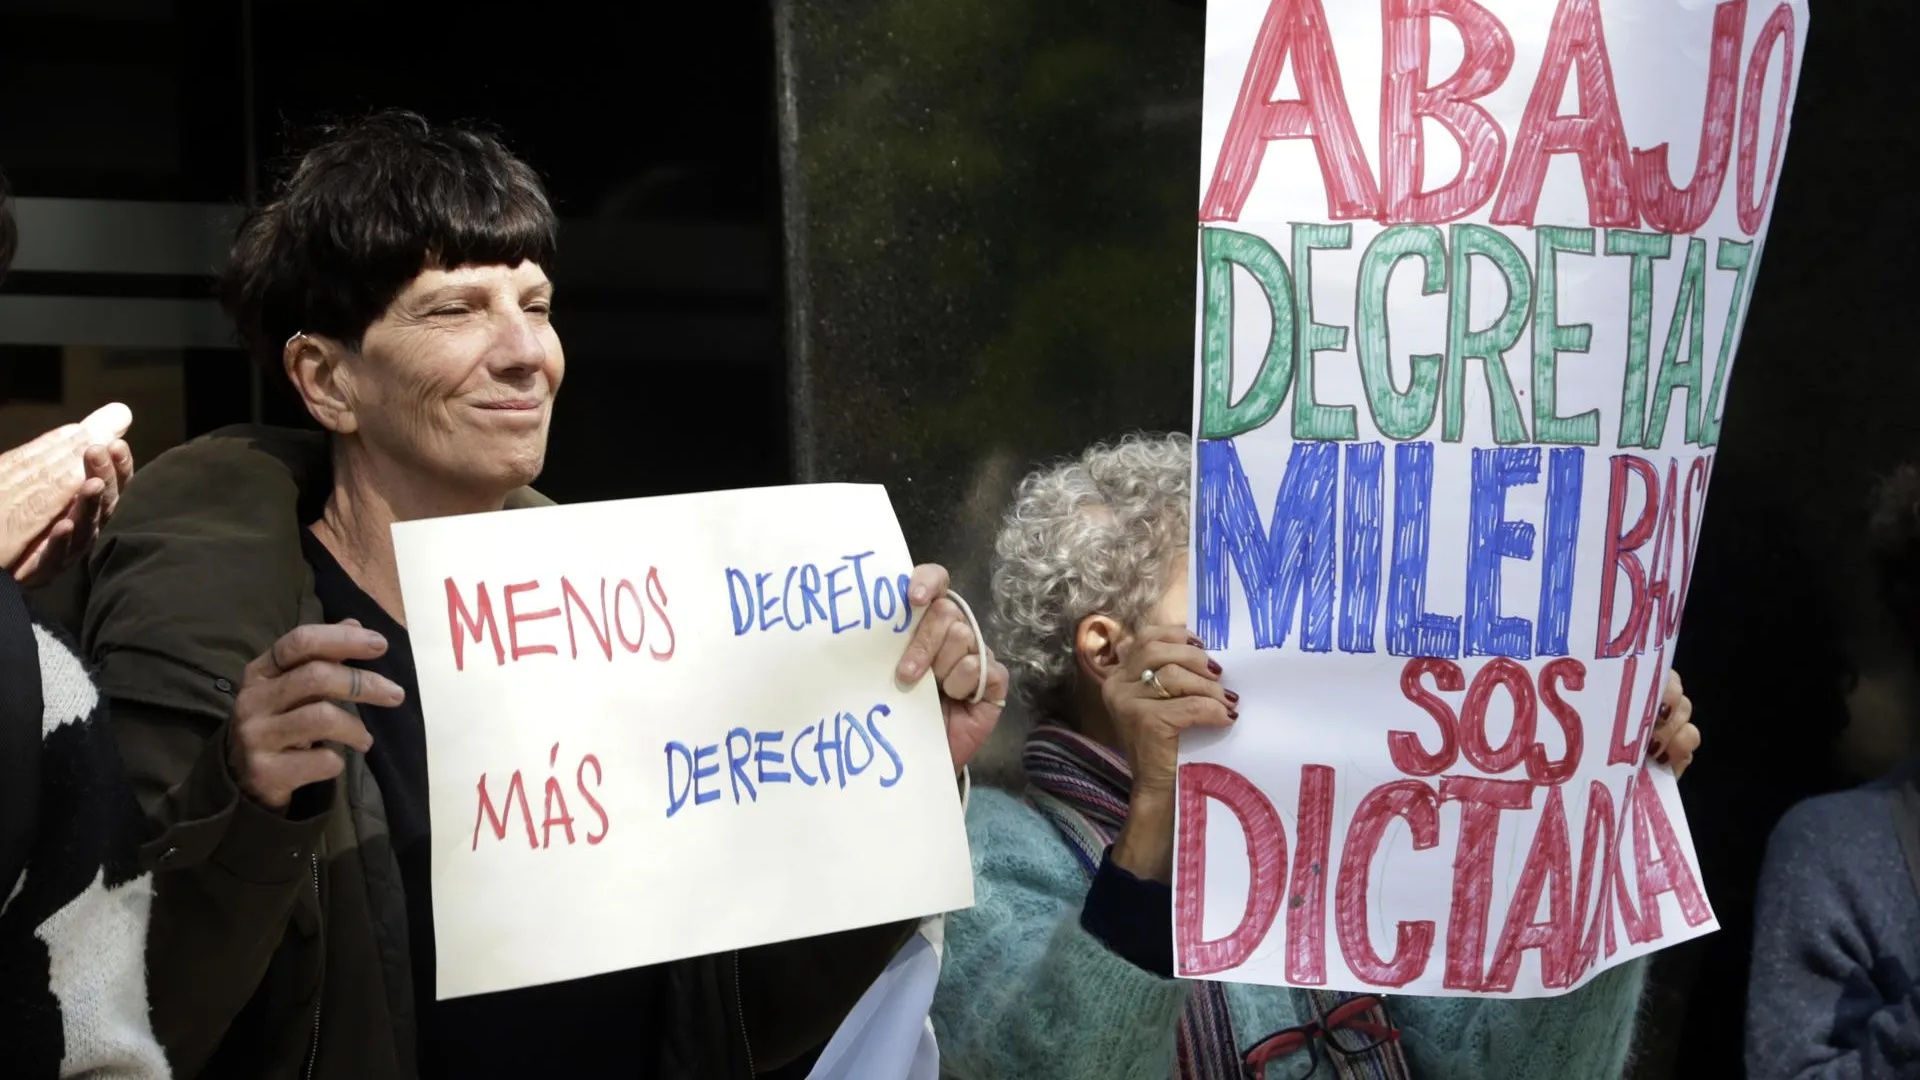 Протестанты в Буэнос-Айресе. Надпись на плакате: «Меньше декретов, больше прав». Фото: Luis Barron / Keystone Press Agency